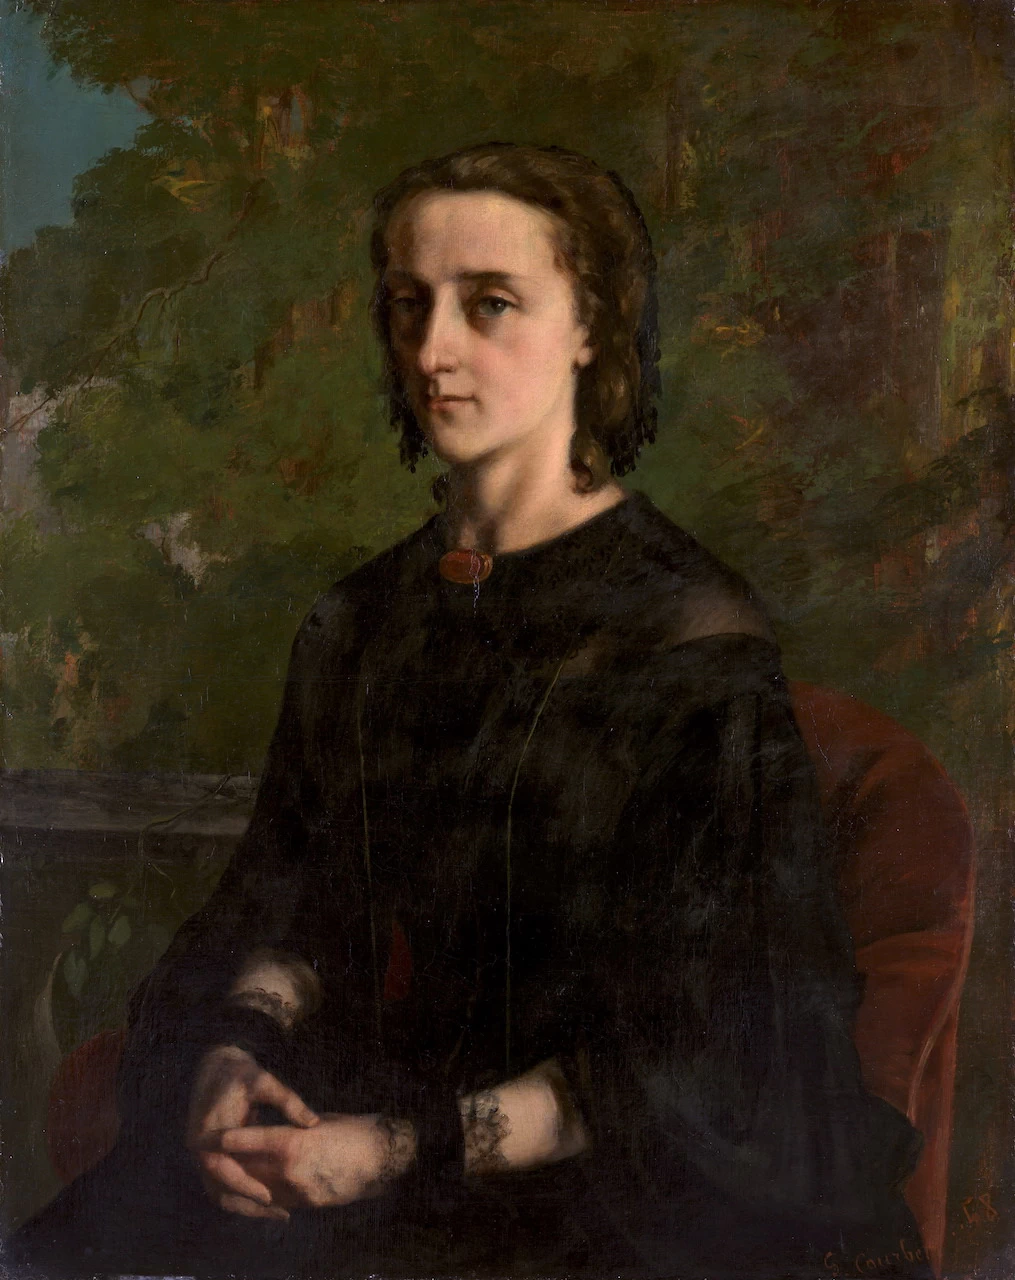  252-Ritratto di Madame de Brayer-Metropolitan Museum of Art-New York 